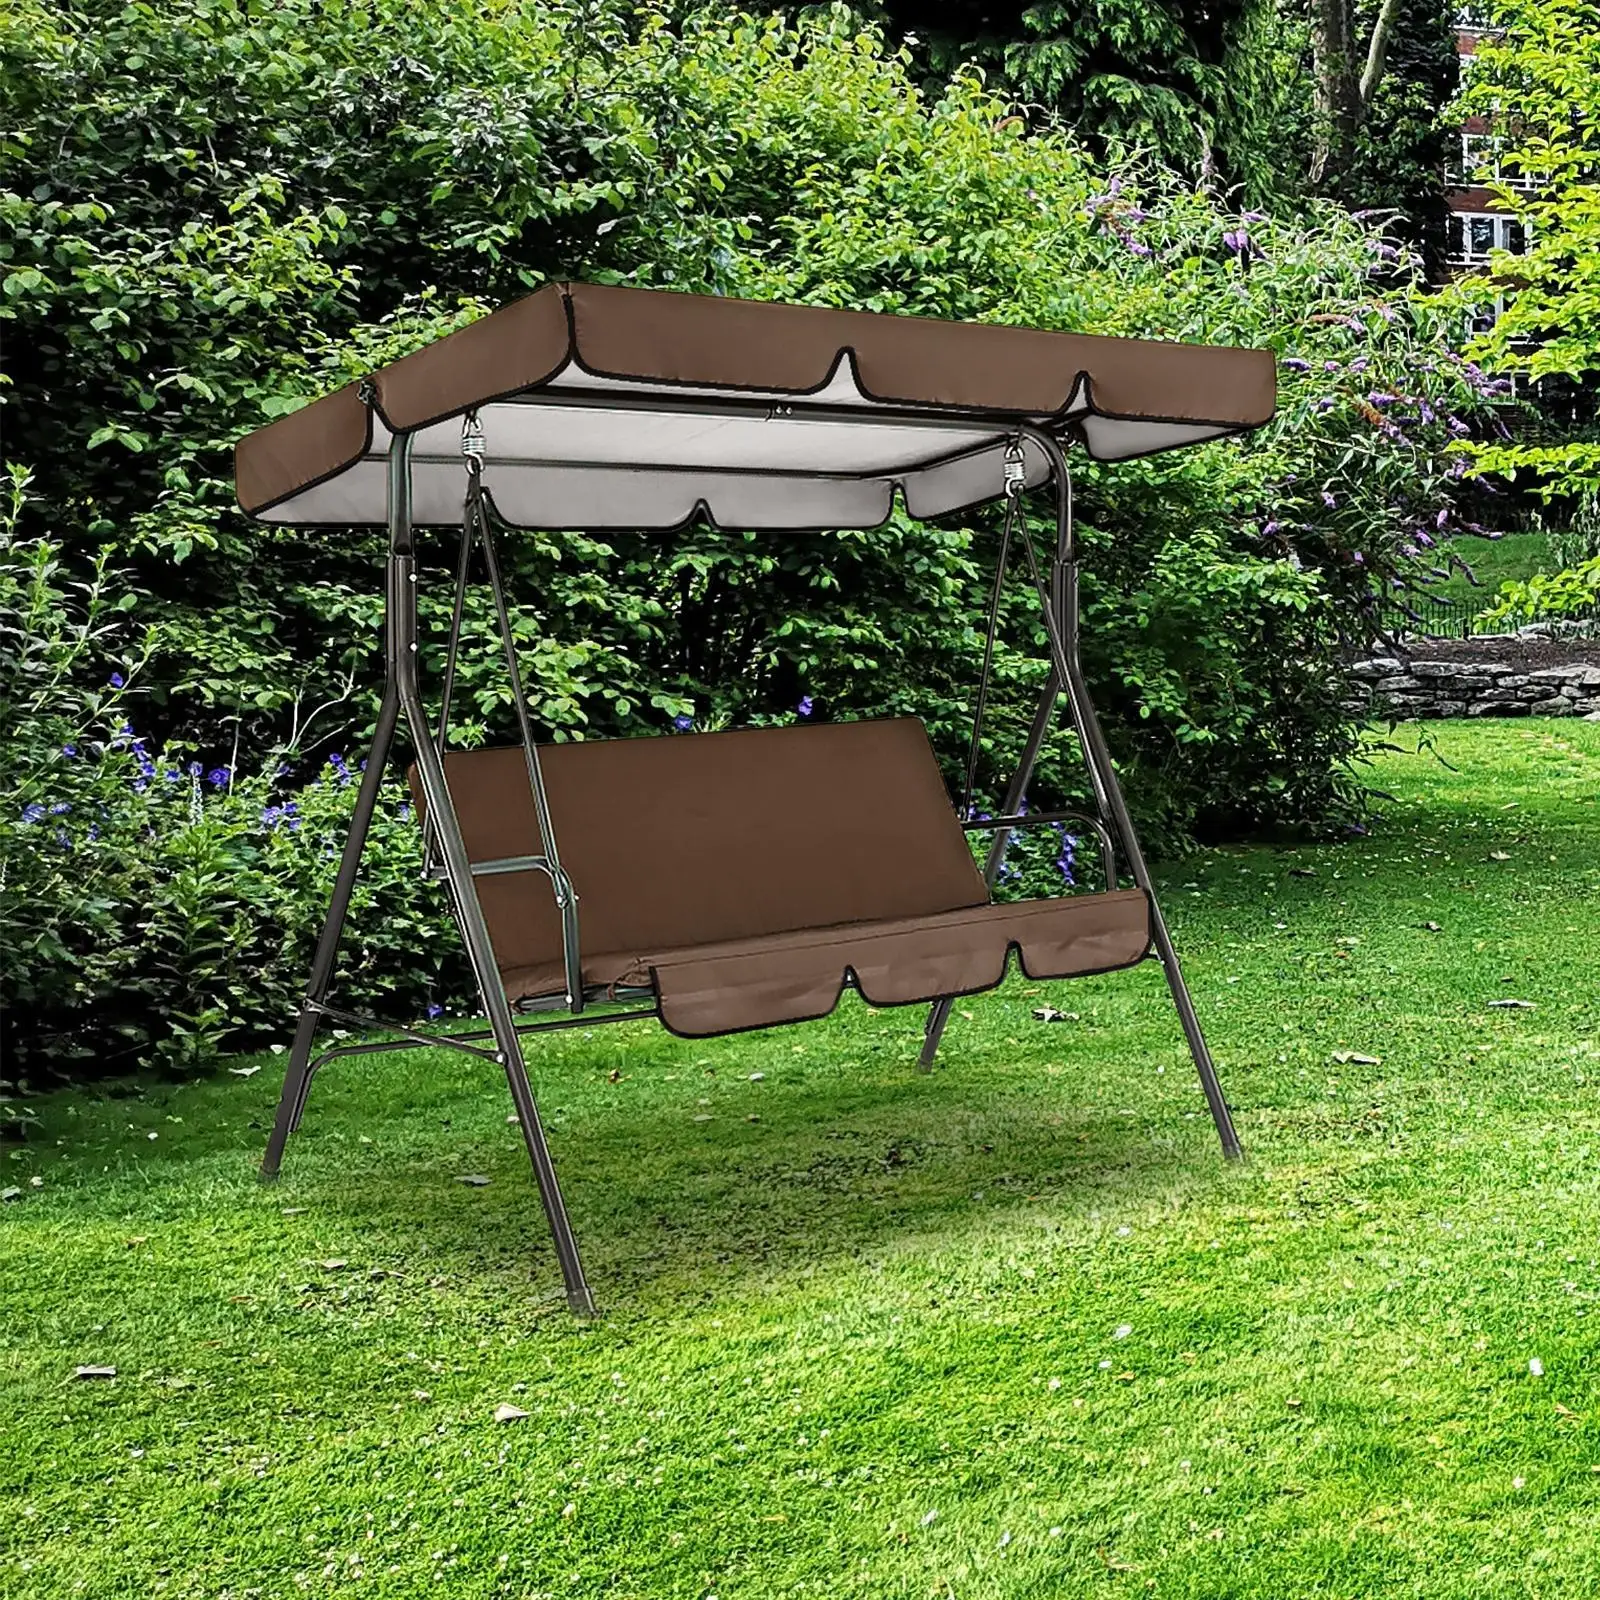 Patio Swing Canopy Rainproof Dustproof Durable Windproof Outdoor Garden Furniture Covers for Swing Porch Seat Garden Yard Patio